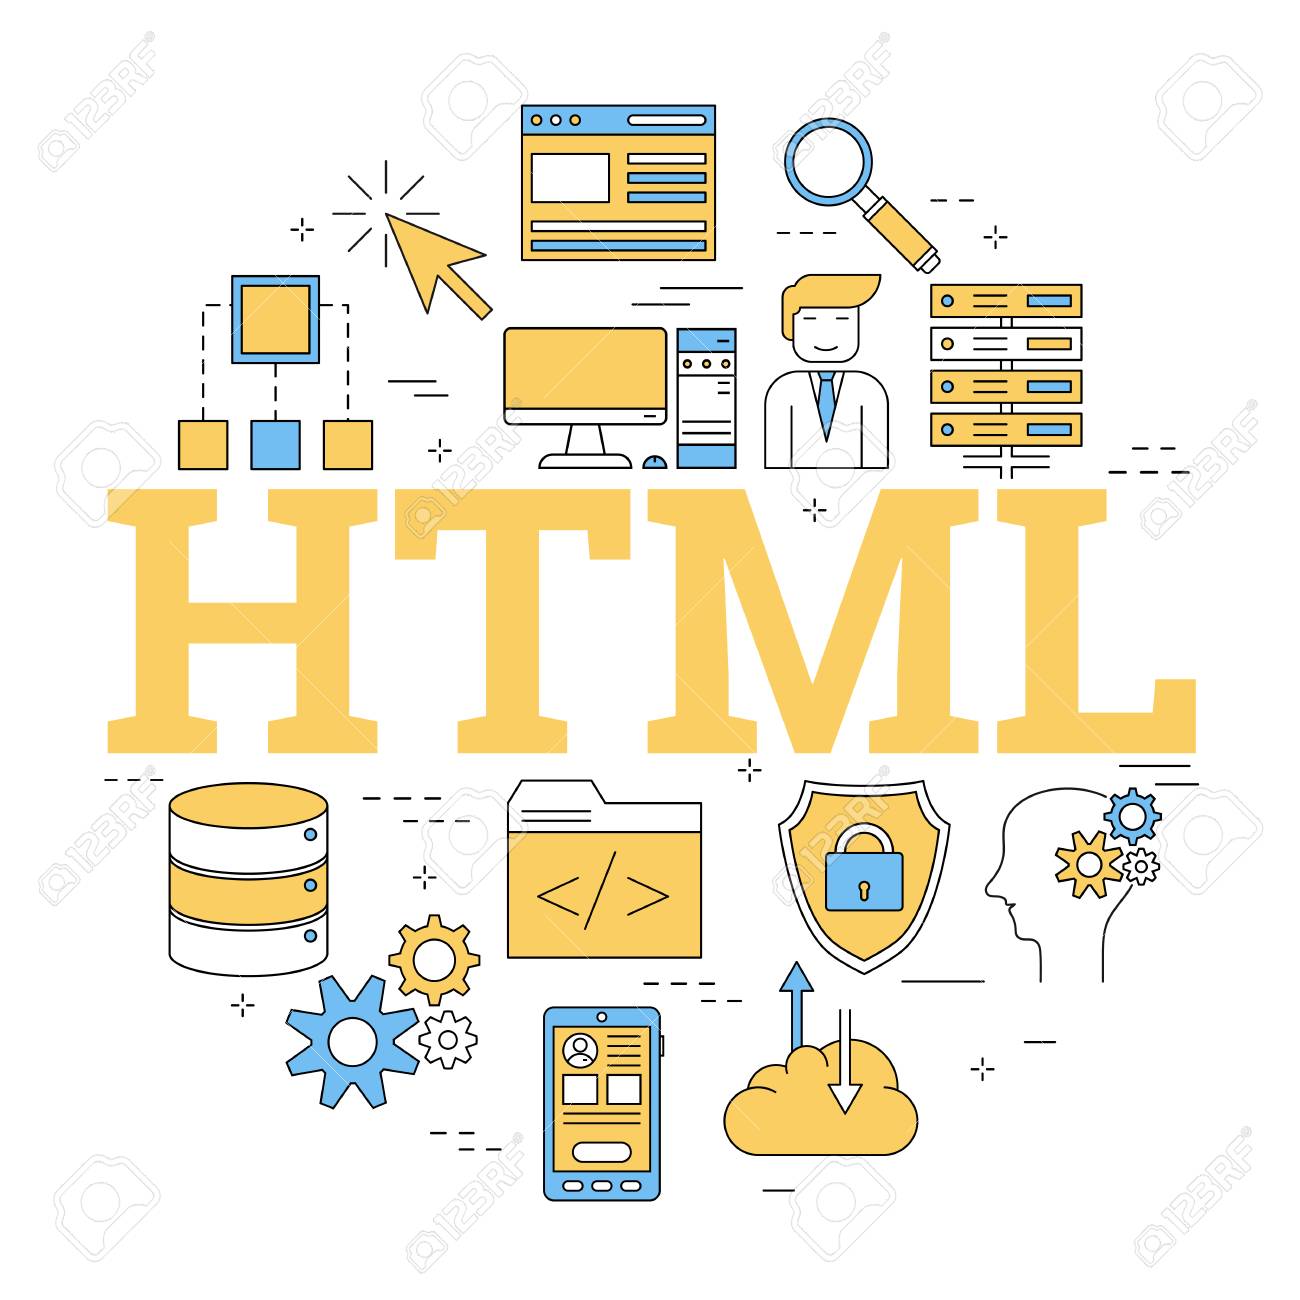 Hypertext Markup Language (HTML)